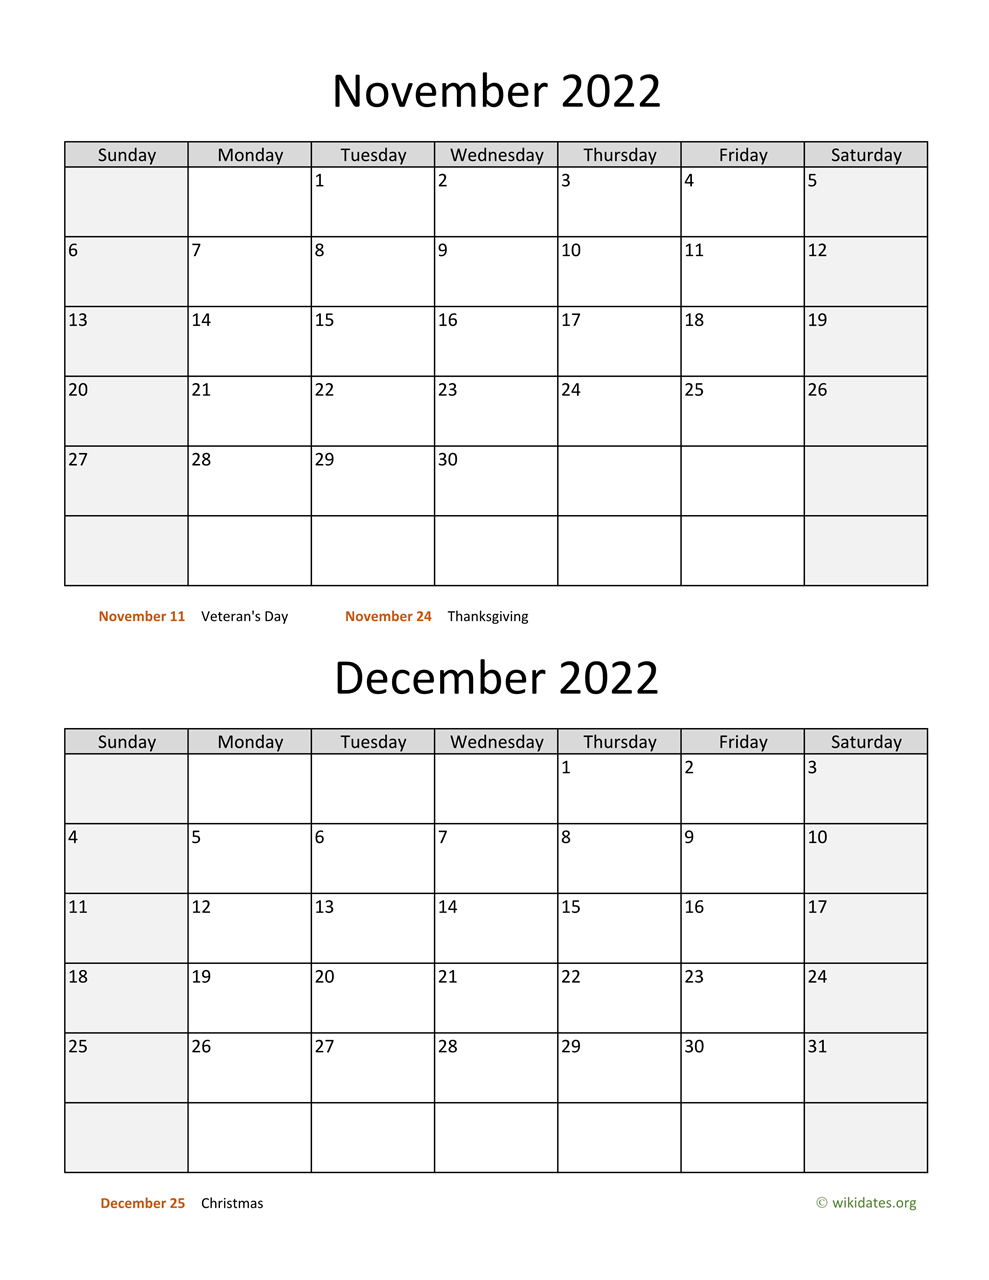 November and December 2022 Calendar